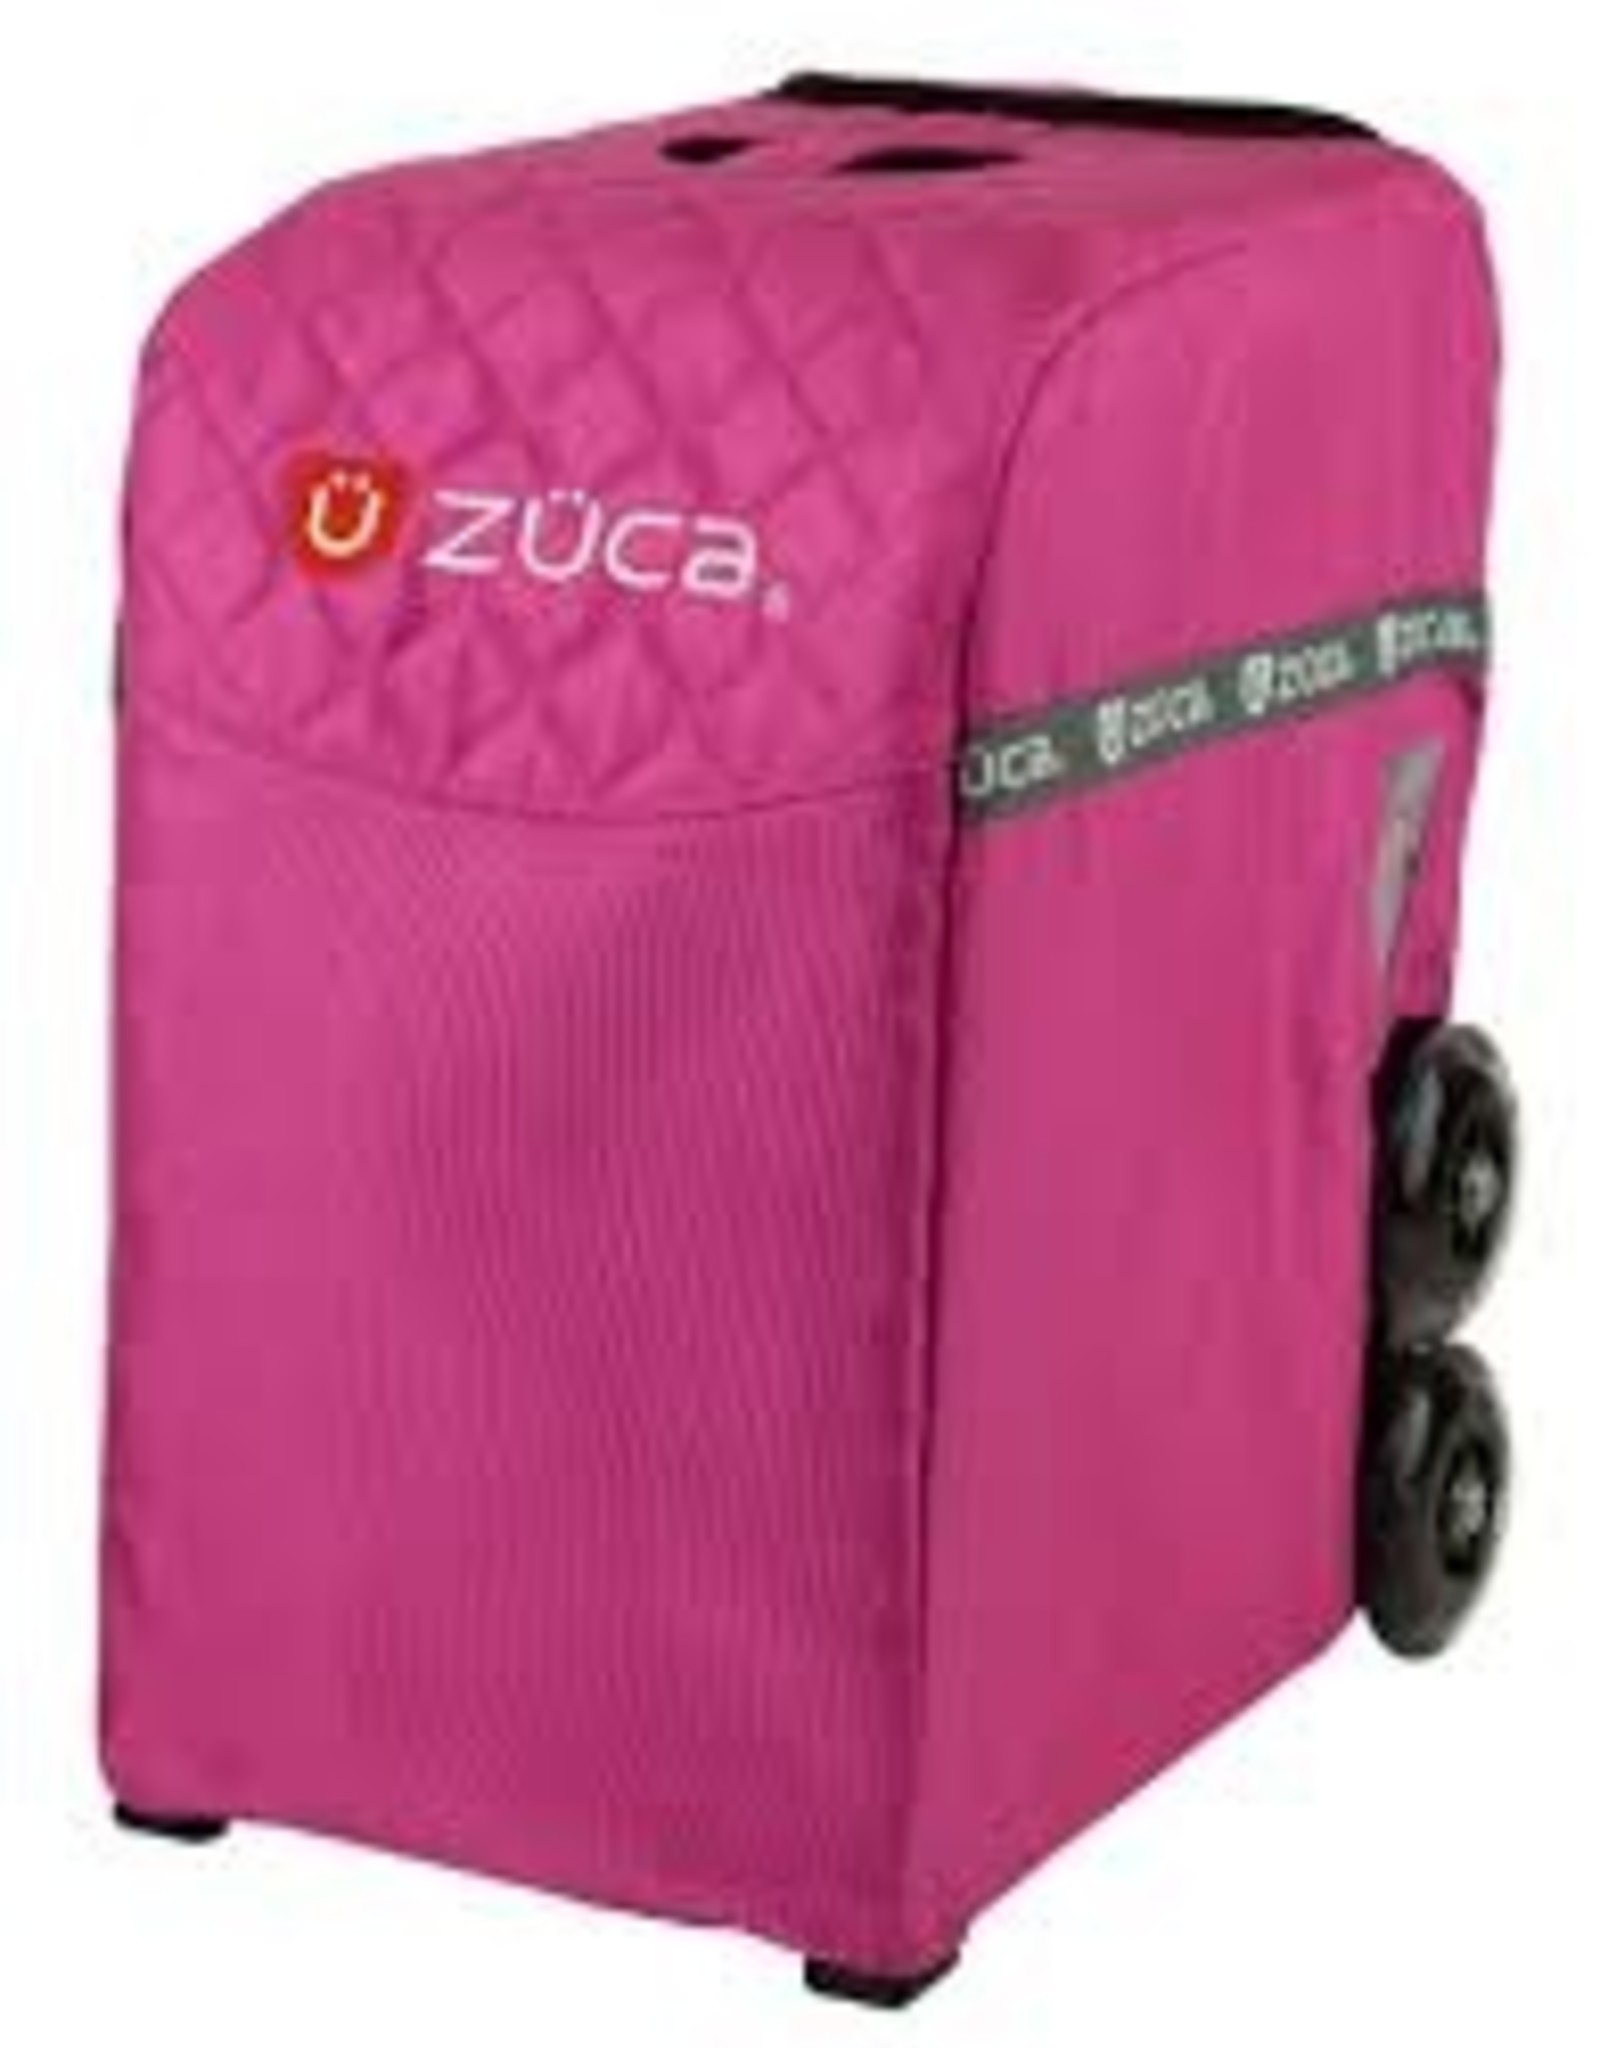 Zuca Zuca sport,travel cover pink